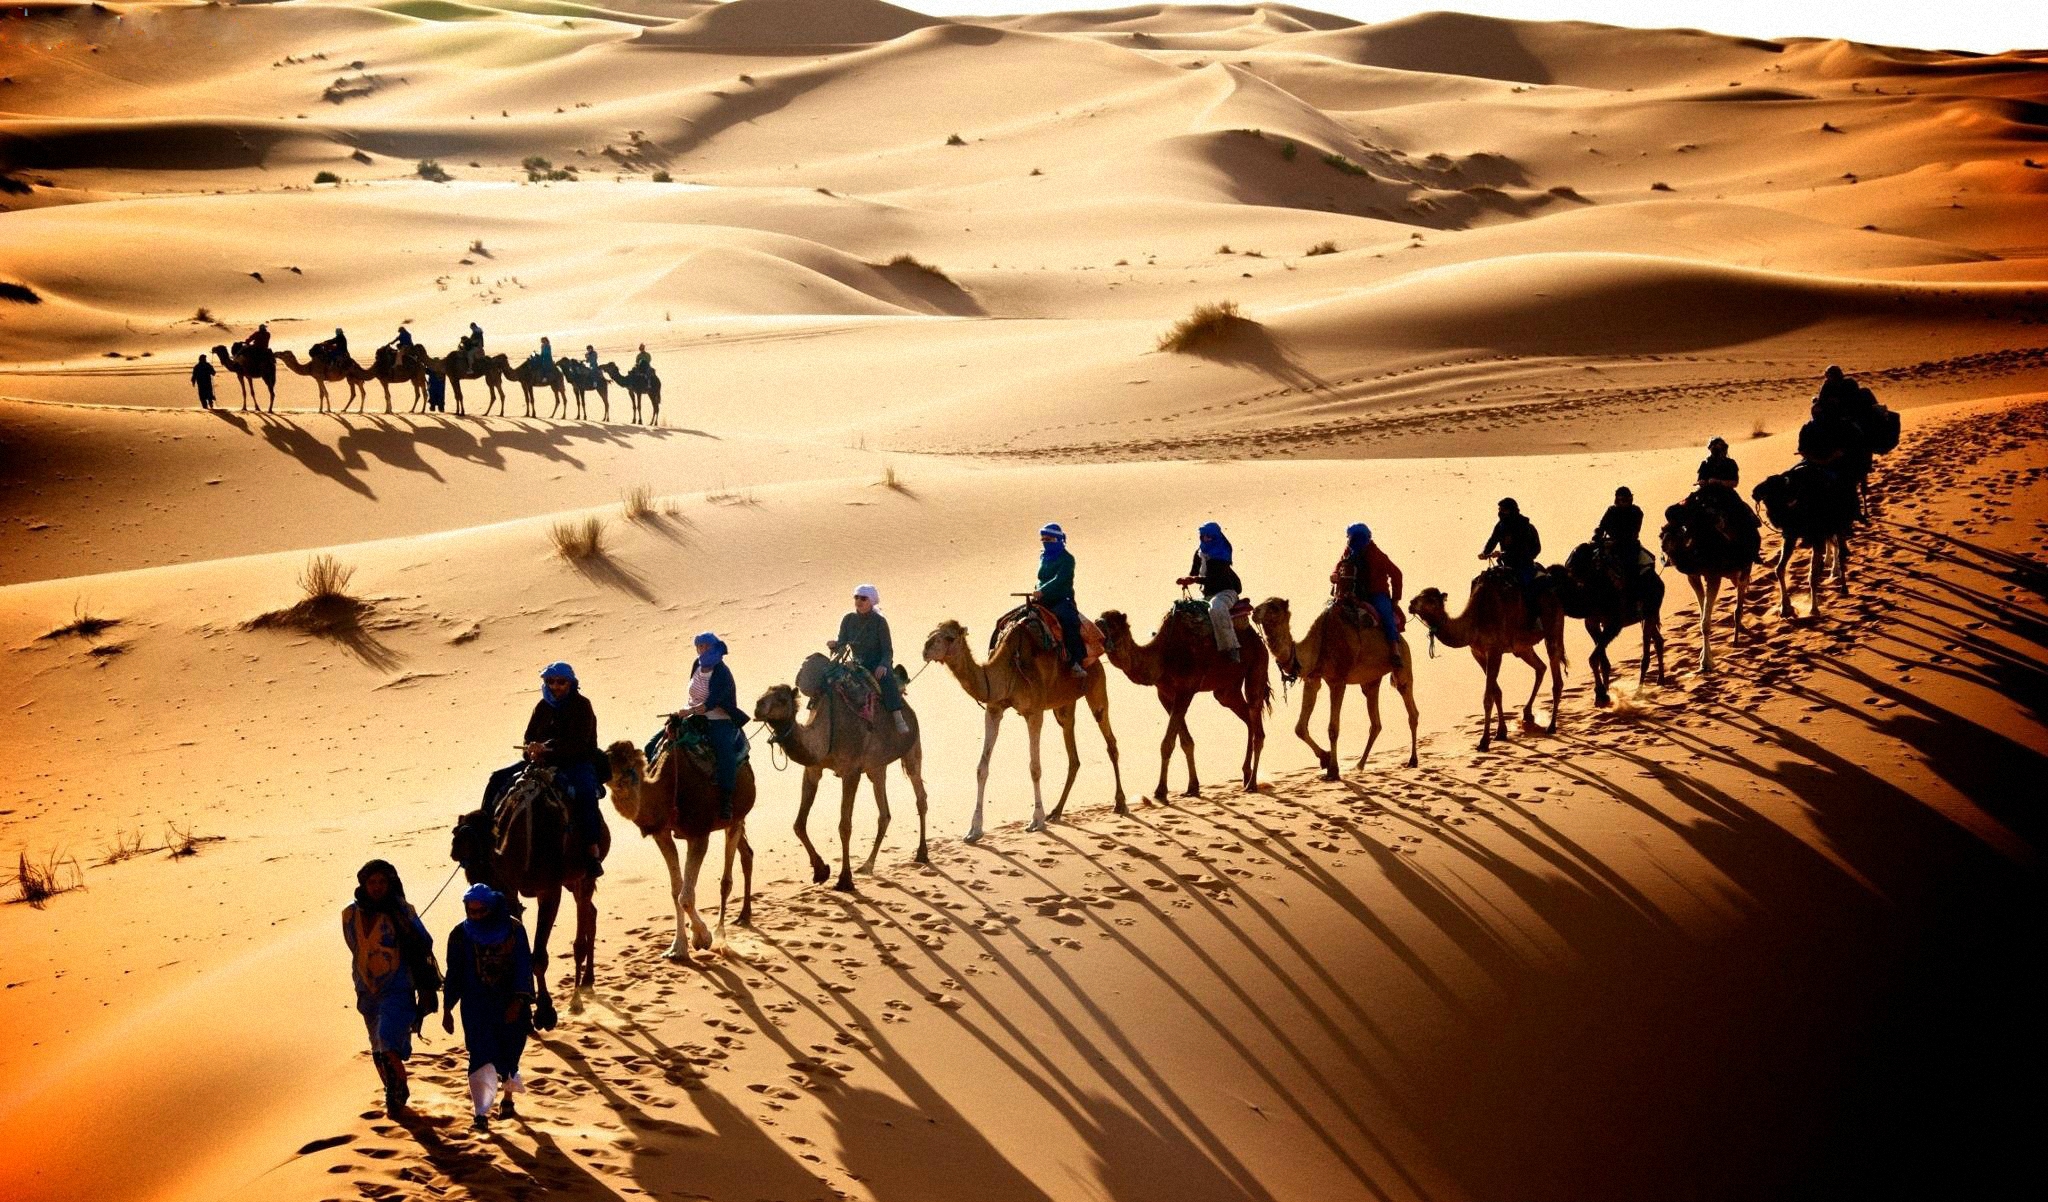 Караван до скольки. Верблюд Караван шелковый путь. Великий шелковый путь Караван. Караван верблюдов в пустыне.